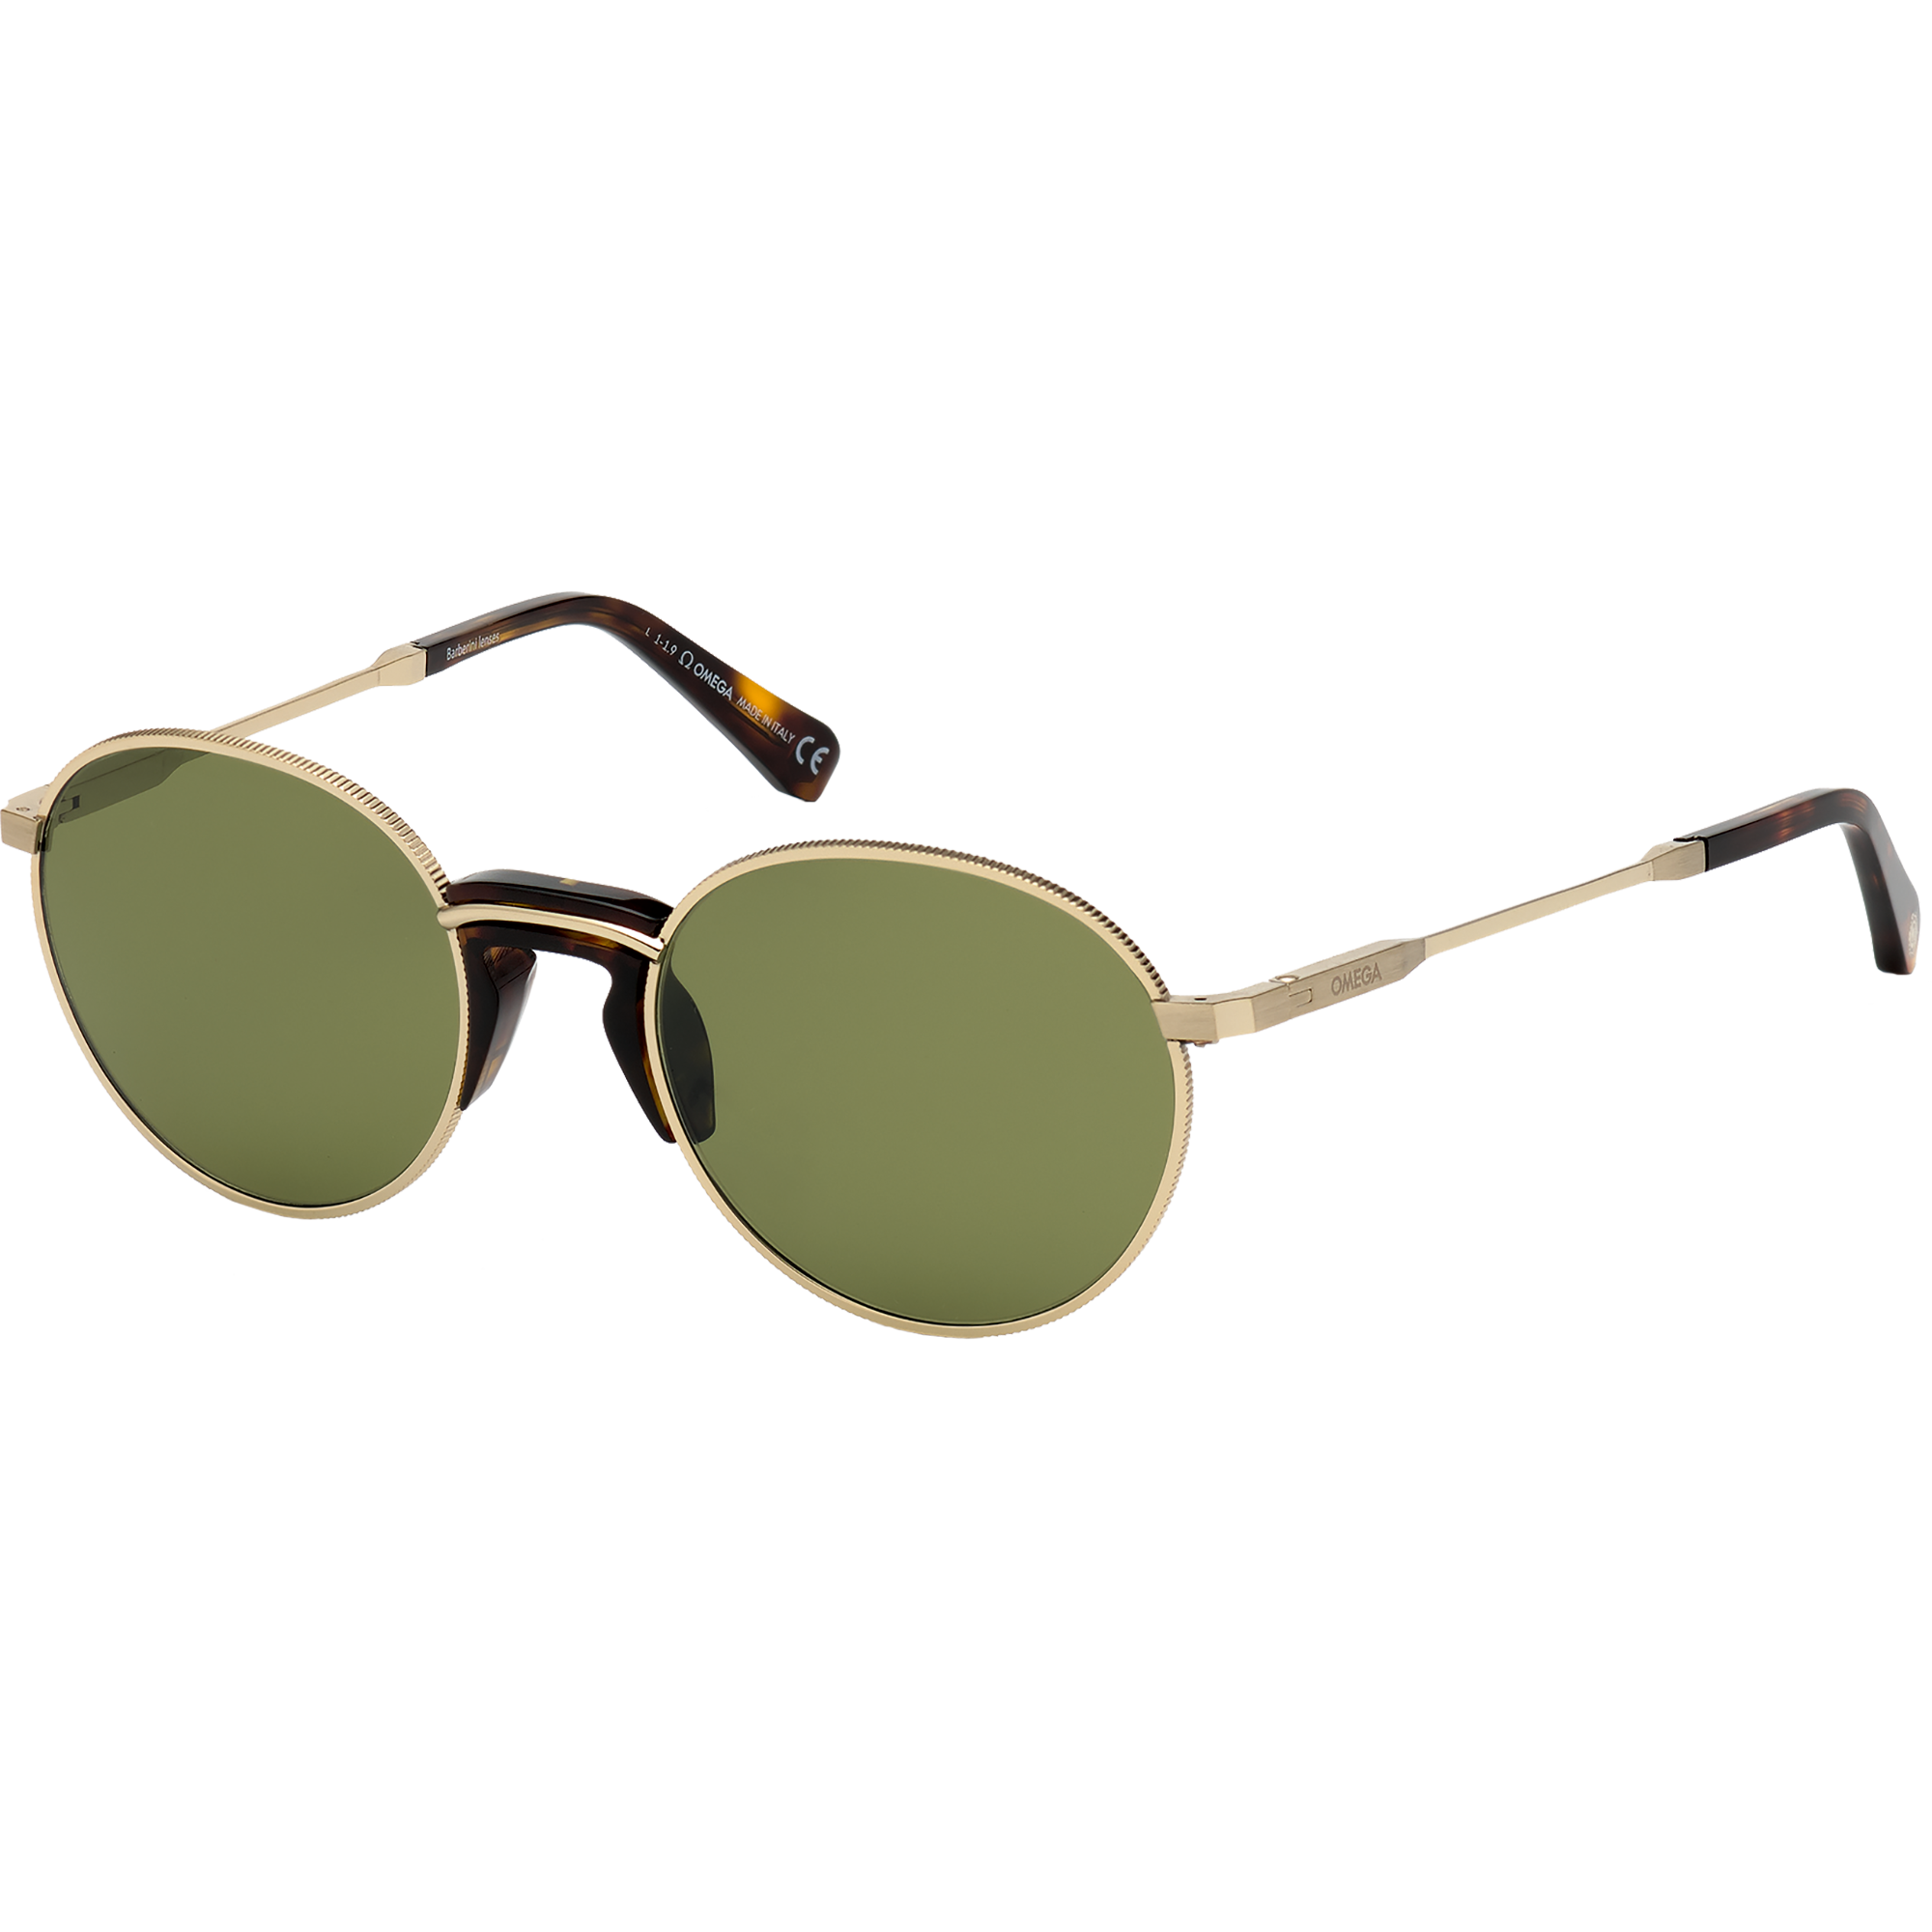 Sunglasses - Round style, Man - OM0019-H5332V